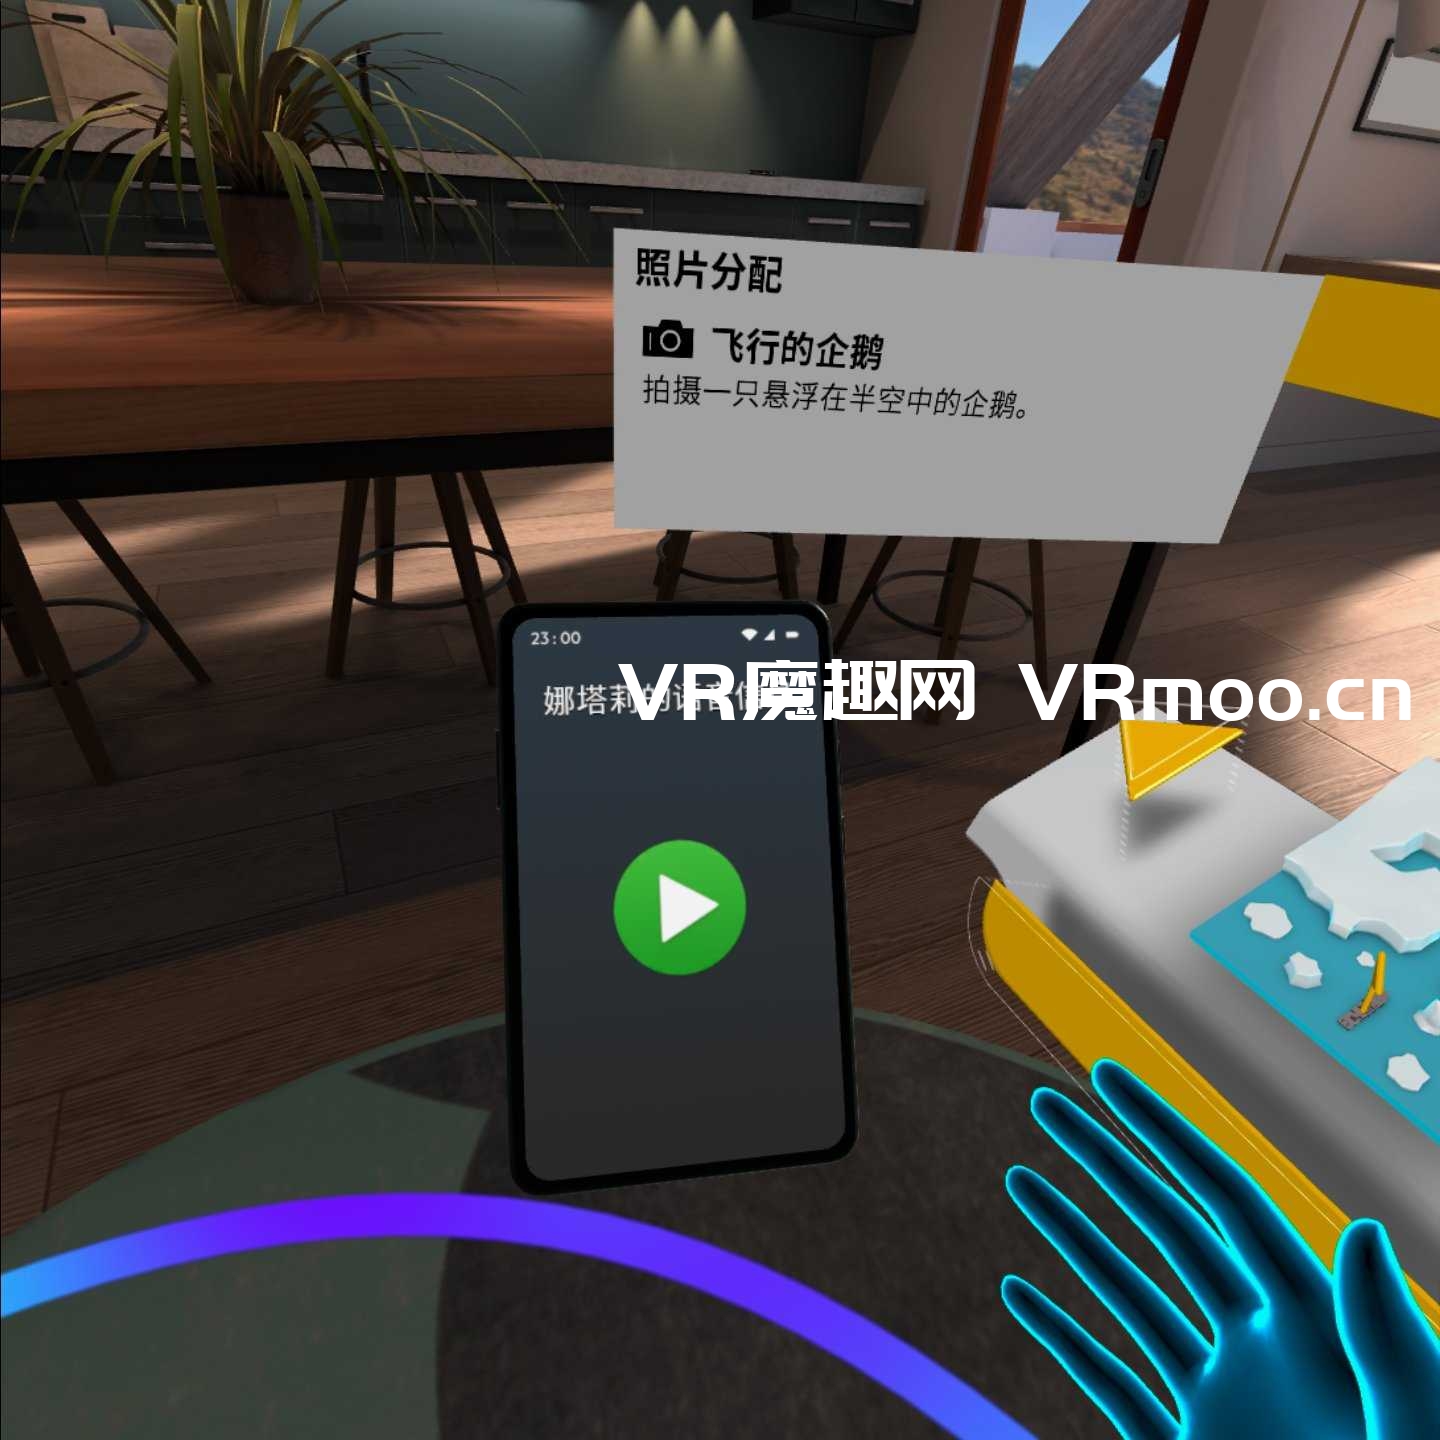 Oculus Quest 游戏《国家地理汉化中文版》National Geographic Explore VR